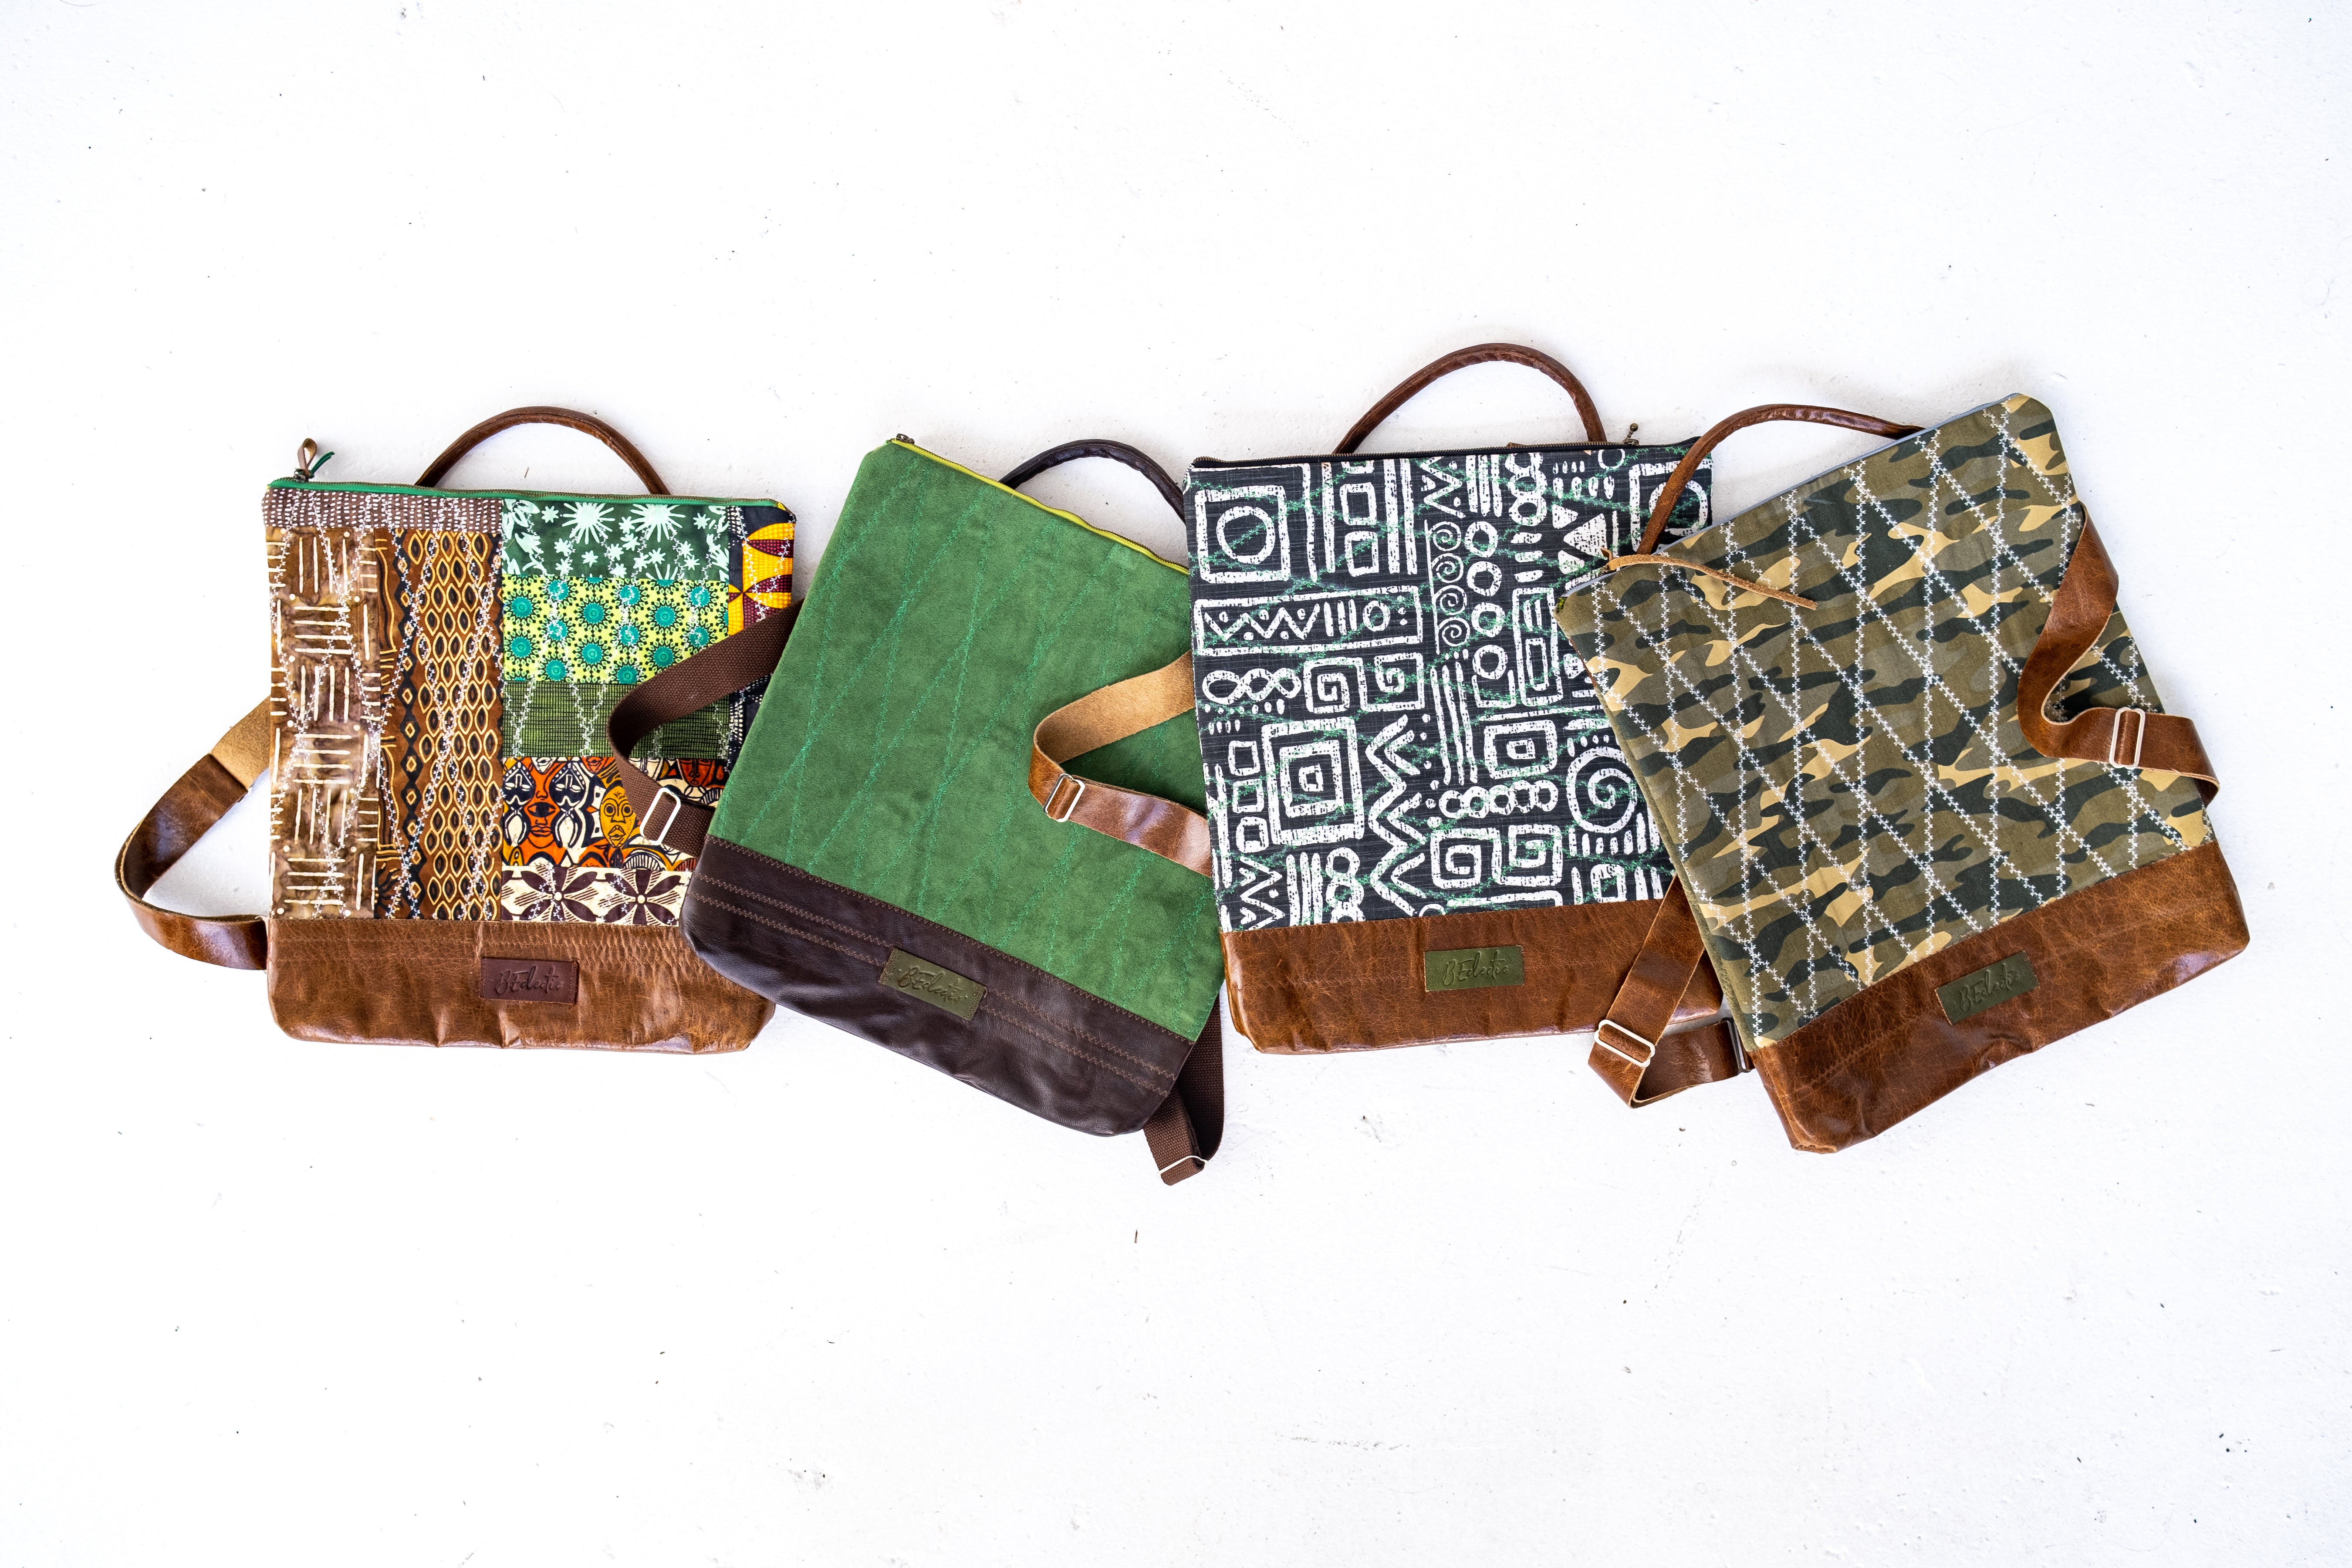 A Collection of B.Eclectic Artisan Handbags